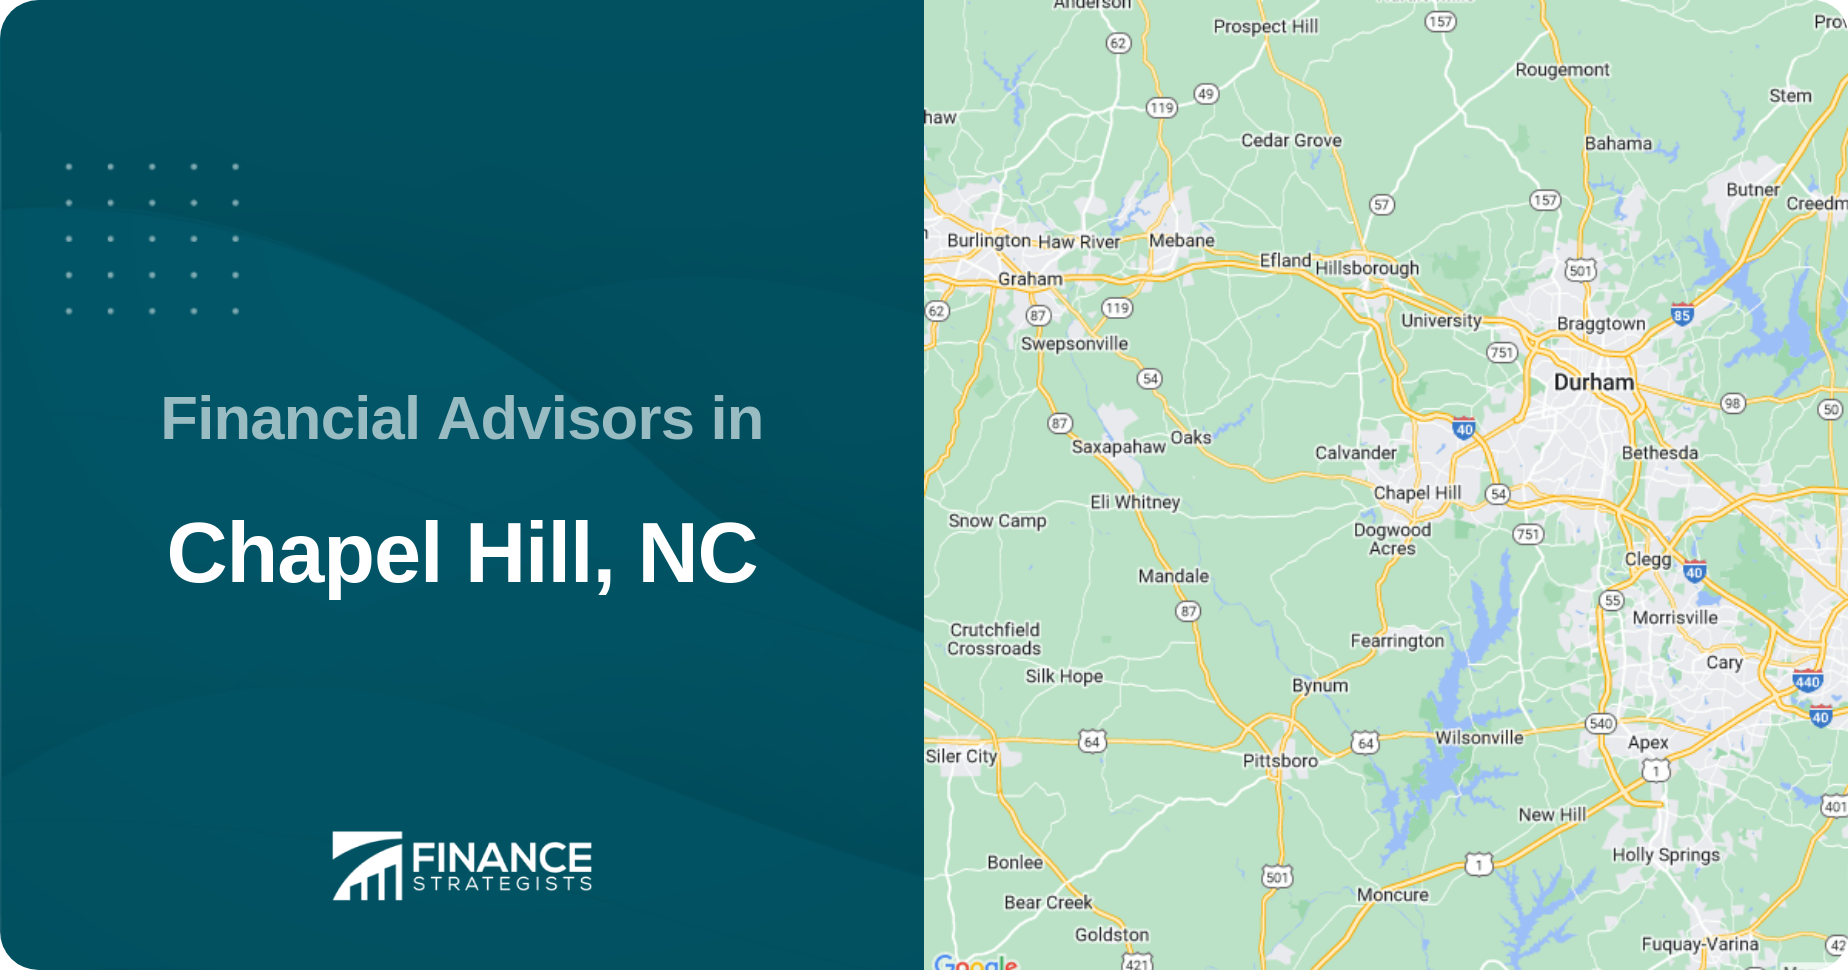 Financial Advisors in Chapel Hill, NC